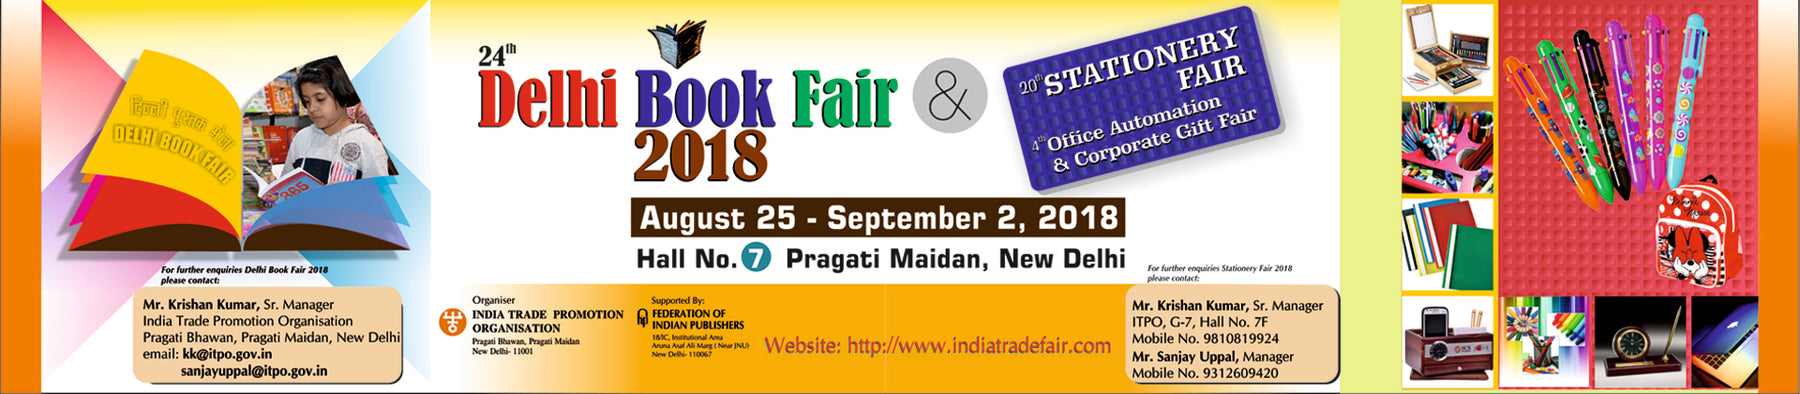 5 Reasons to visit the Delhi Book Fair This Week